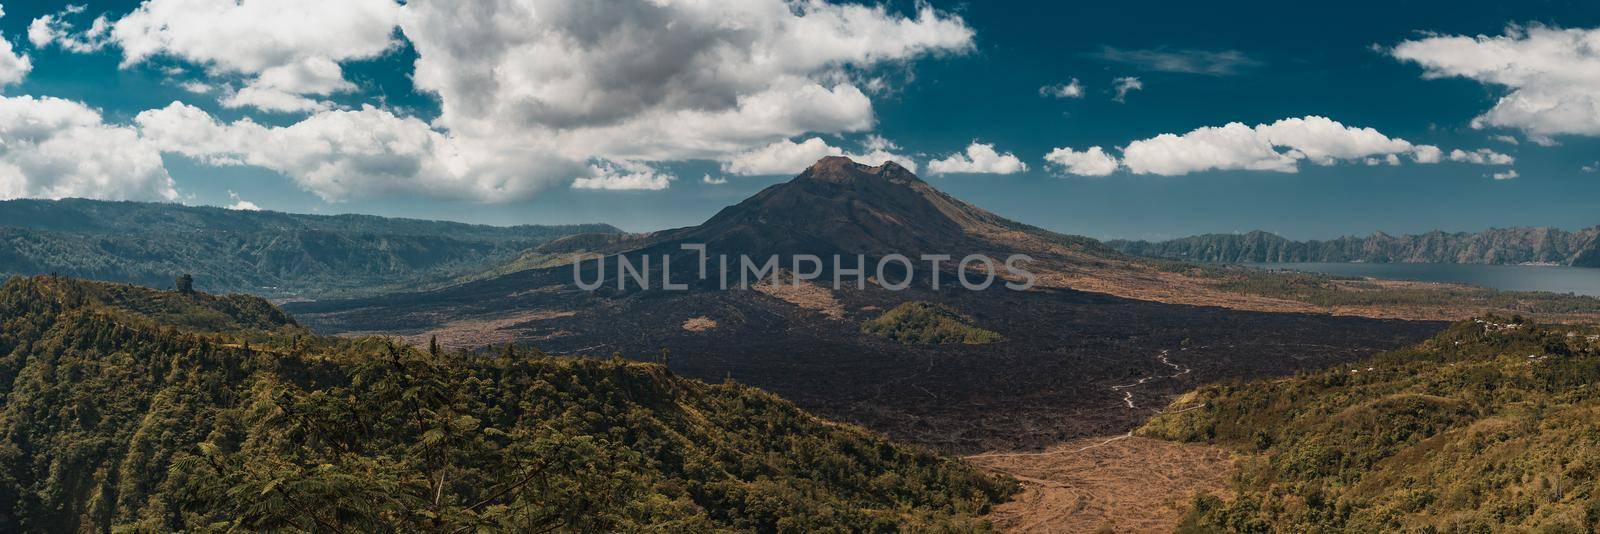 Landscape of Batur volcano on Bali island, Indonesia by artush